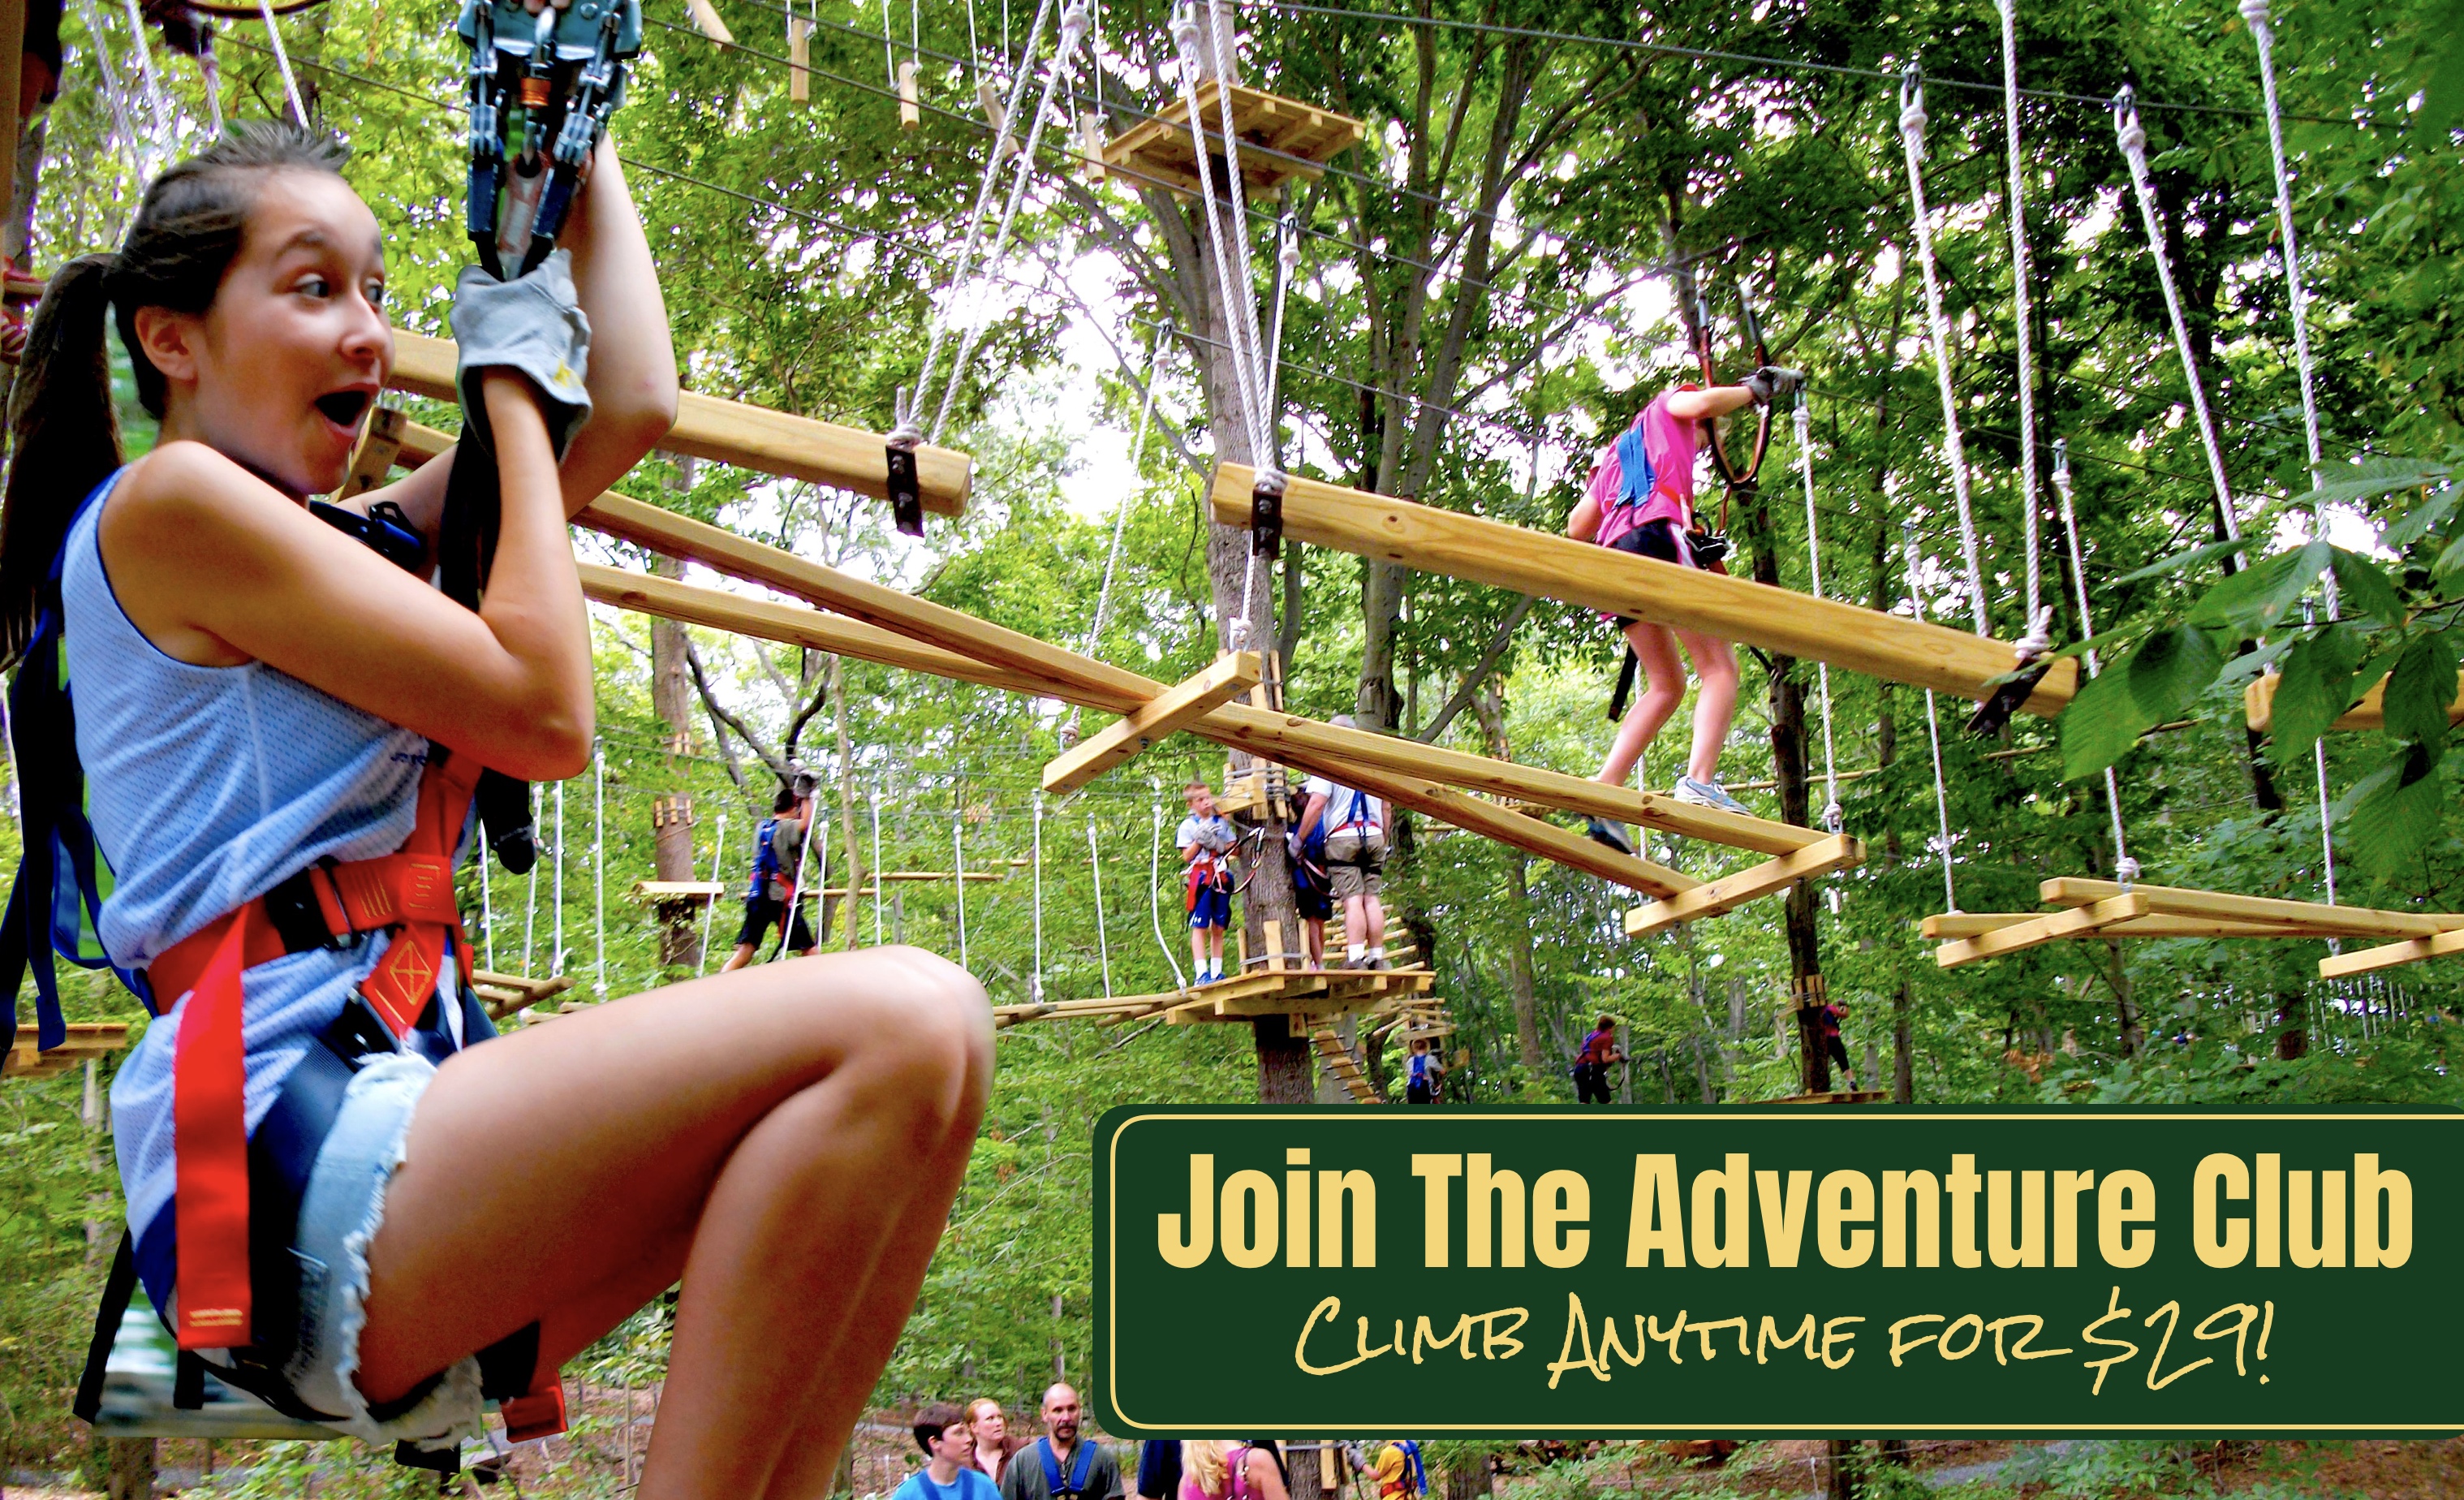 Adventure Park at Long Island Introduces "Adventure Club ...